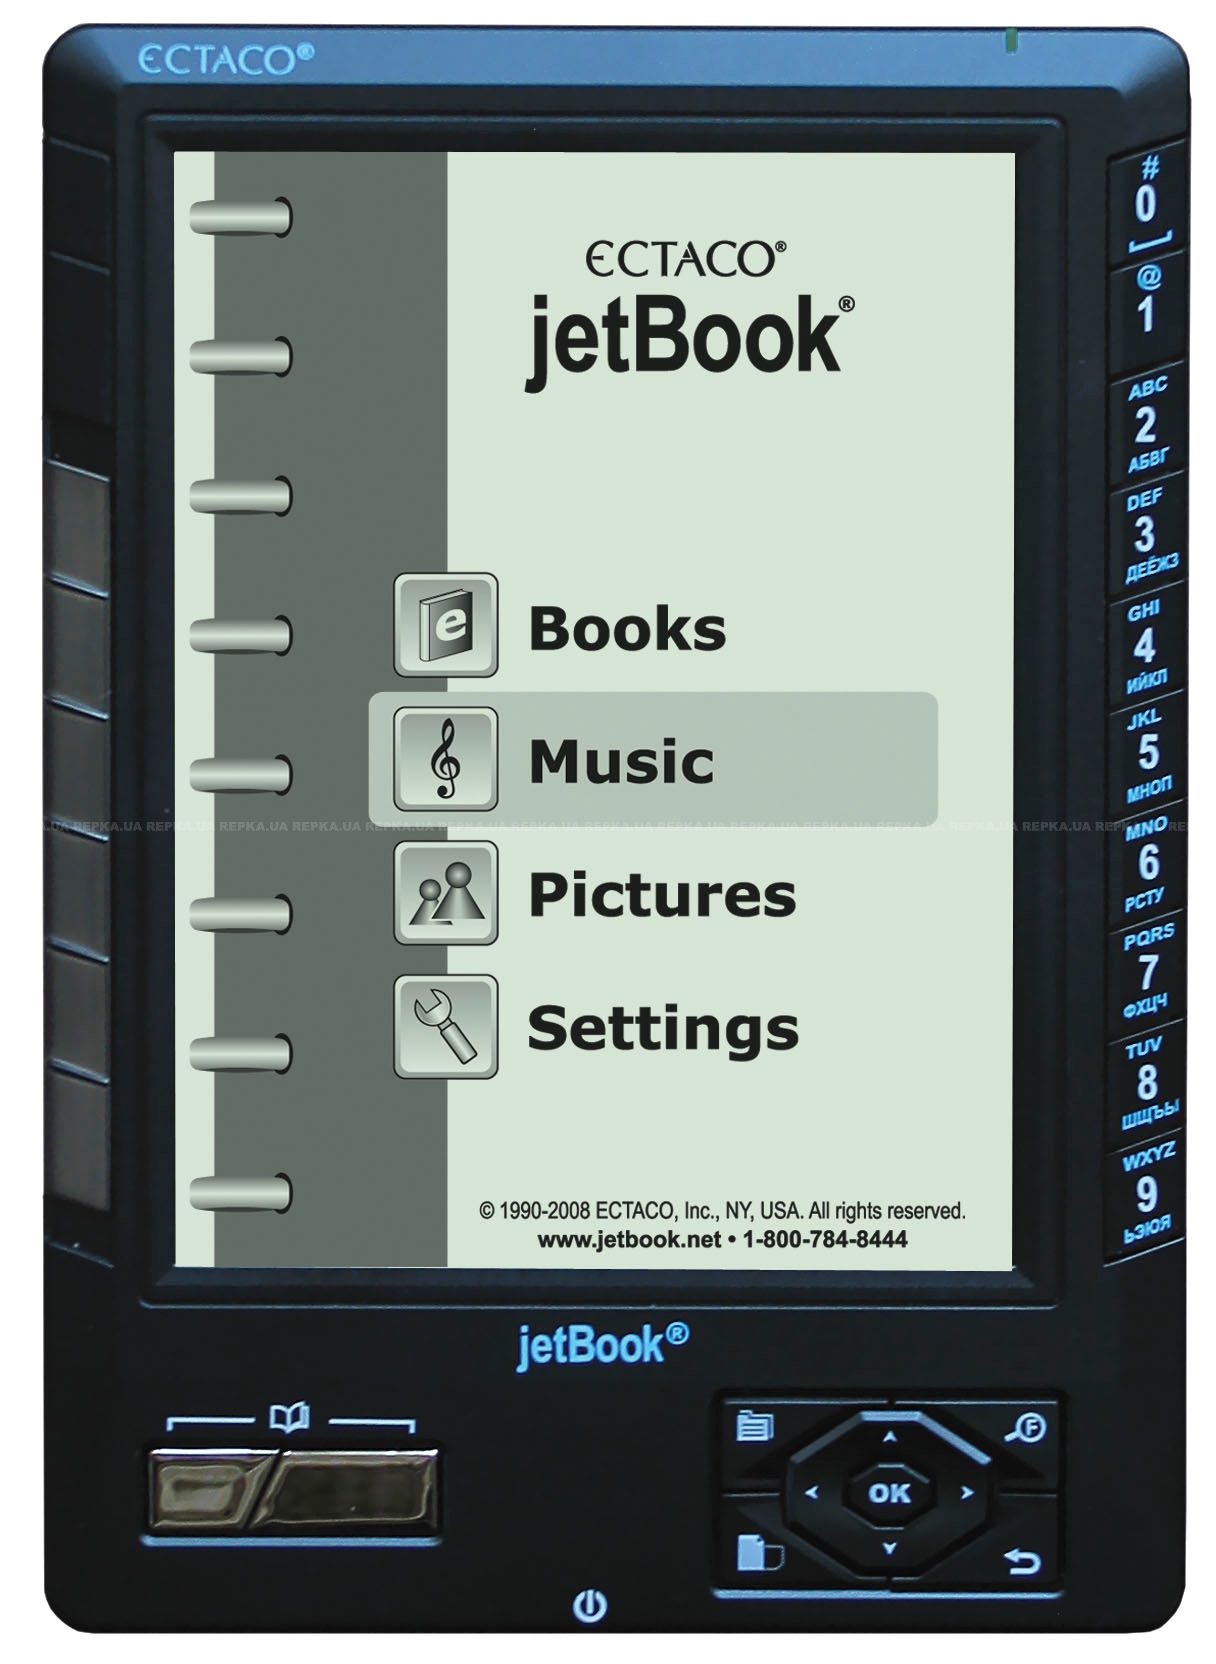 ECTACO jetBook